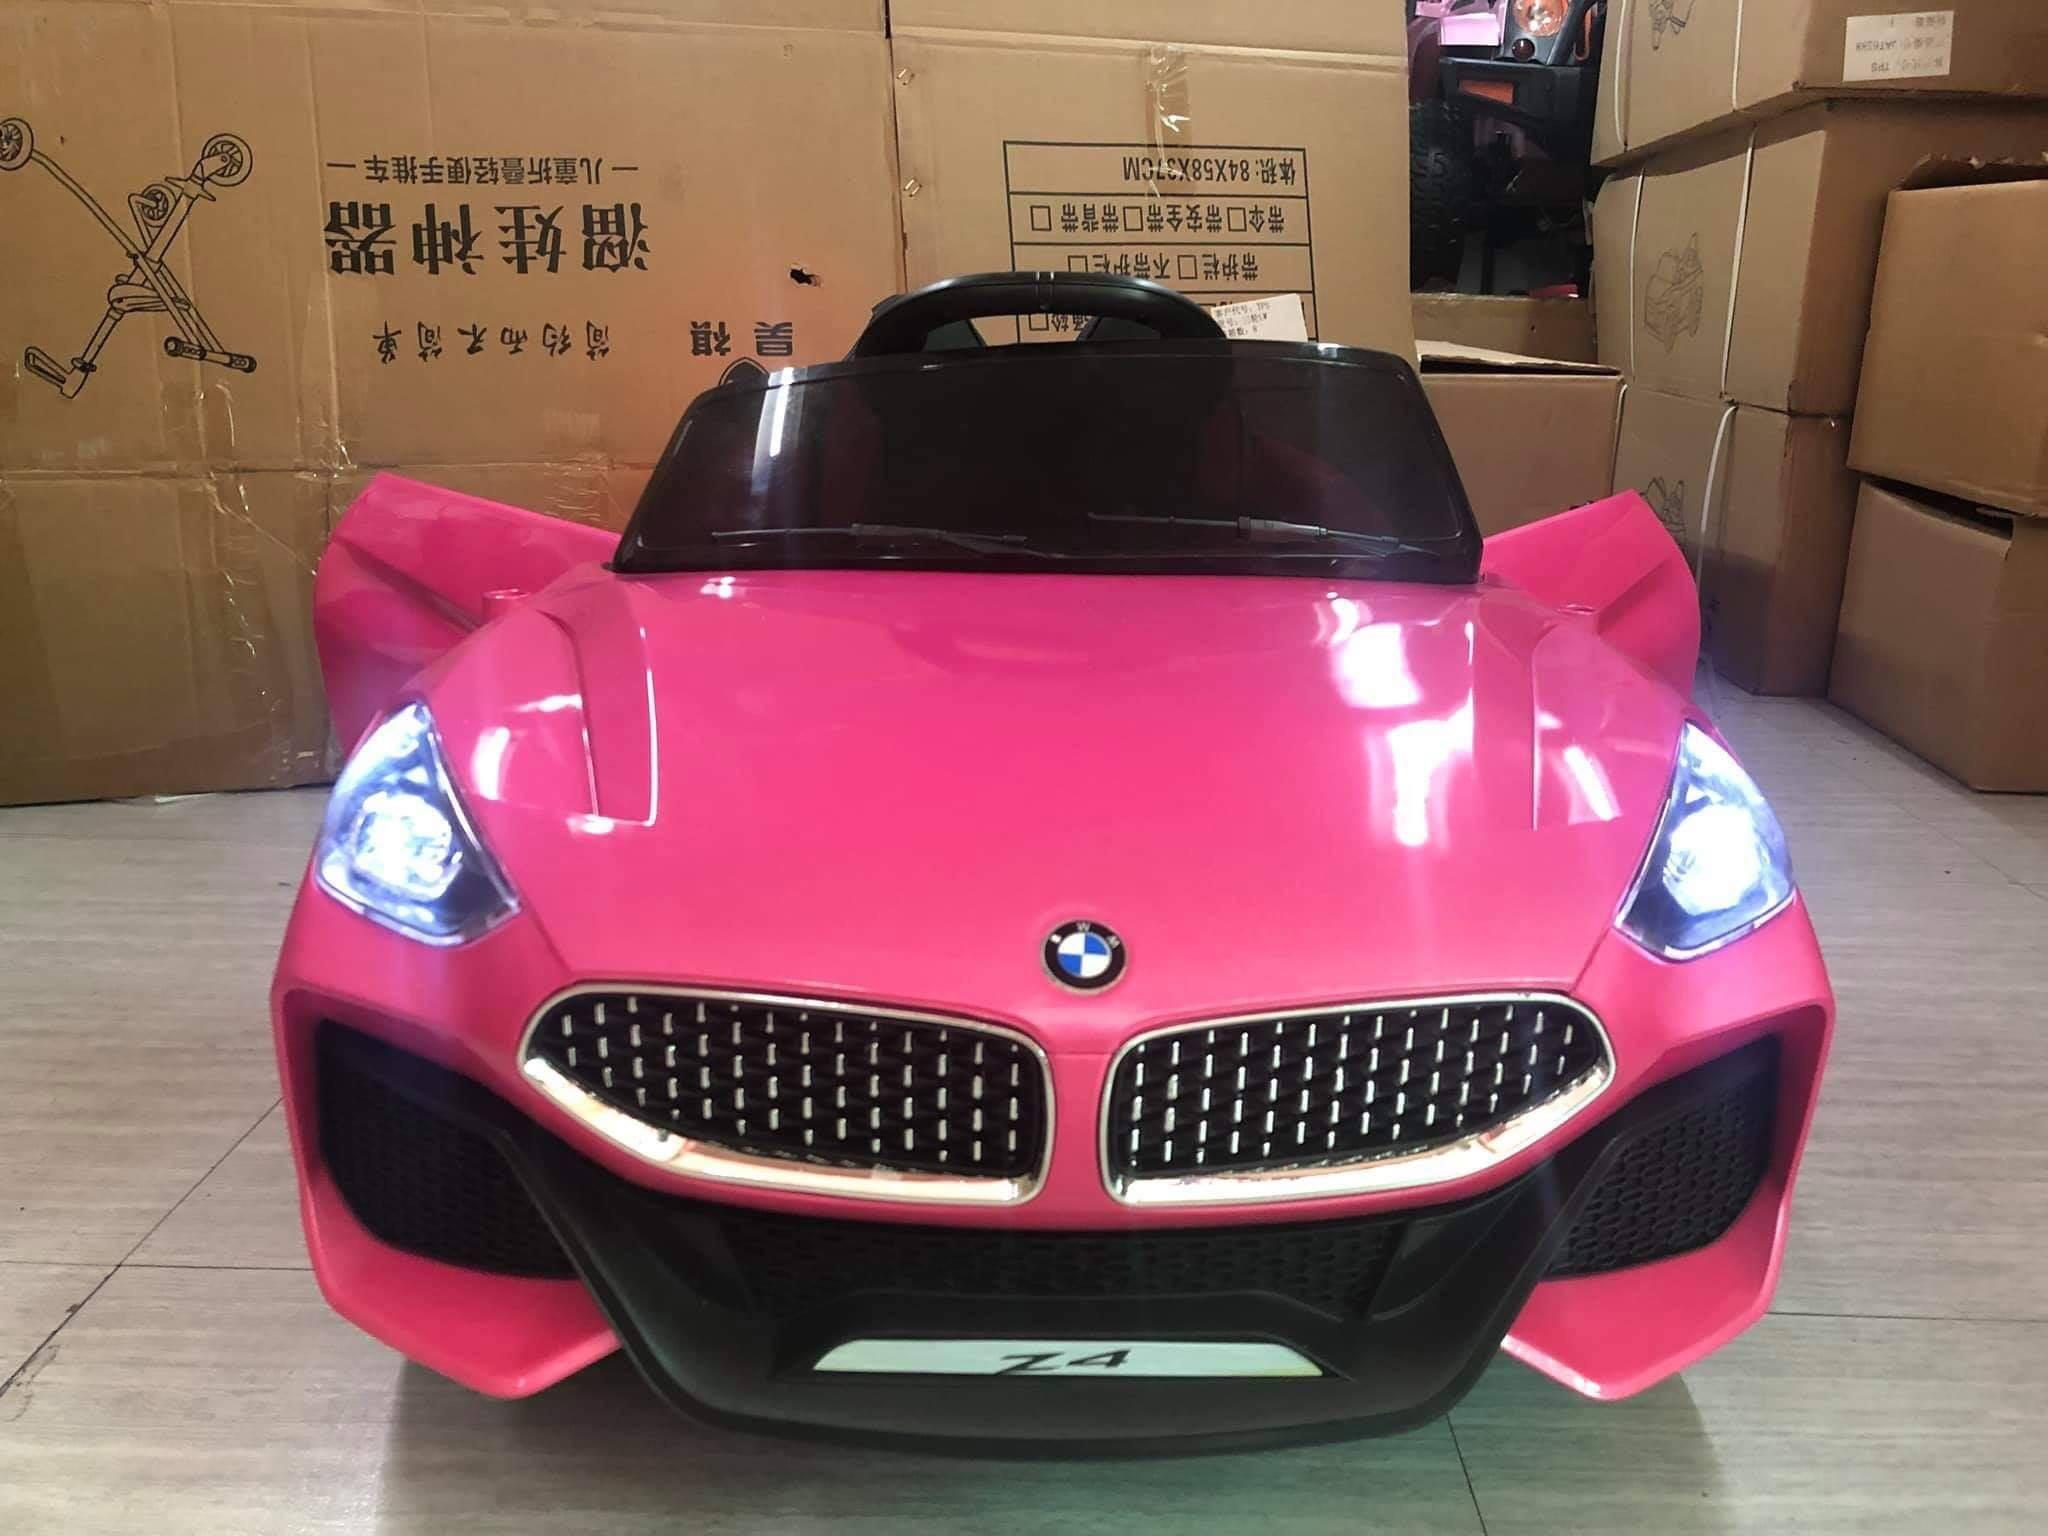 pink bmw ride on car